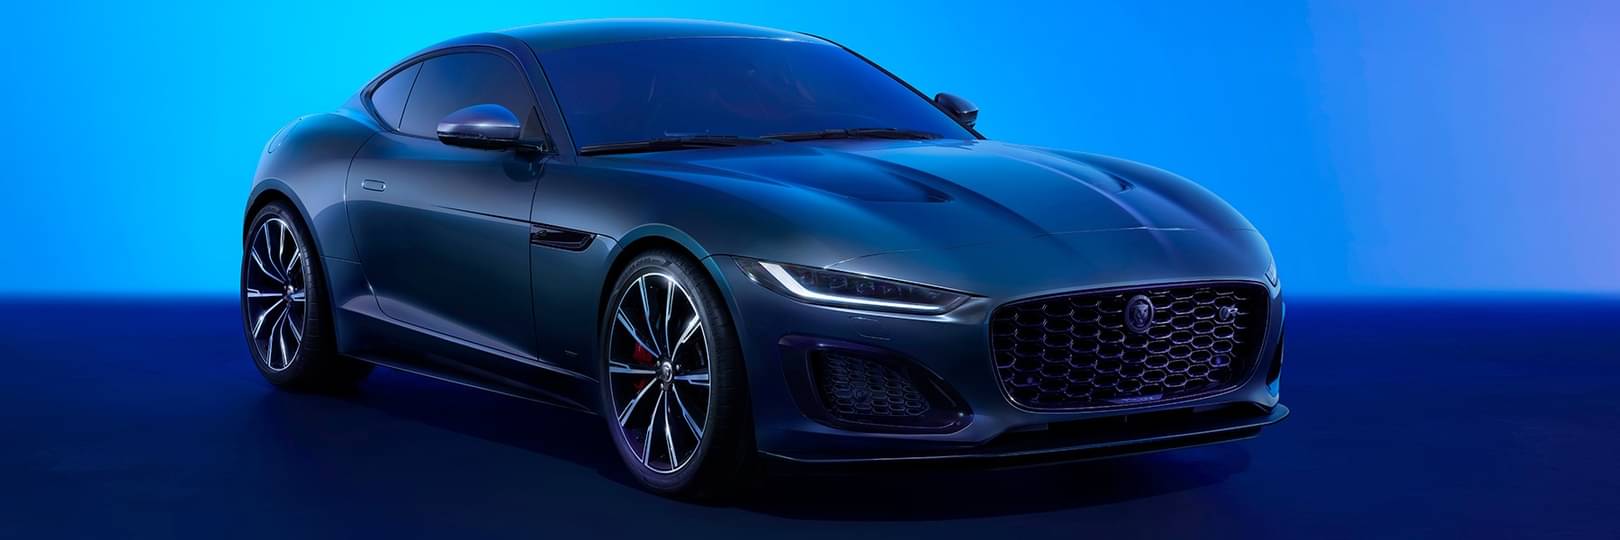 Jaguar F-TYPE | Luxury Sports Car